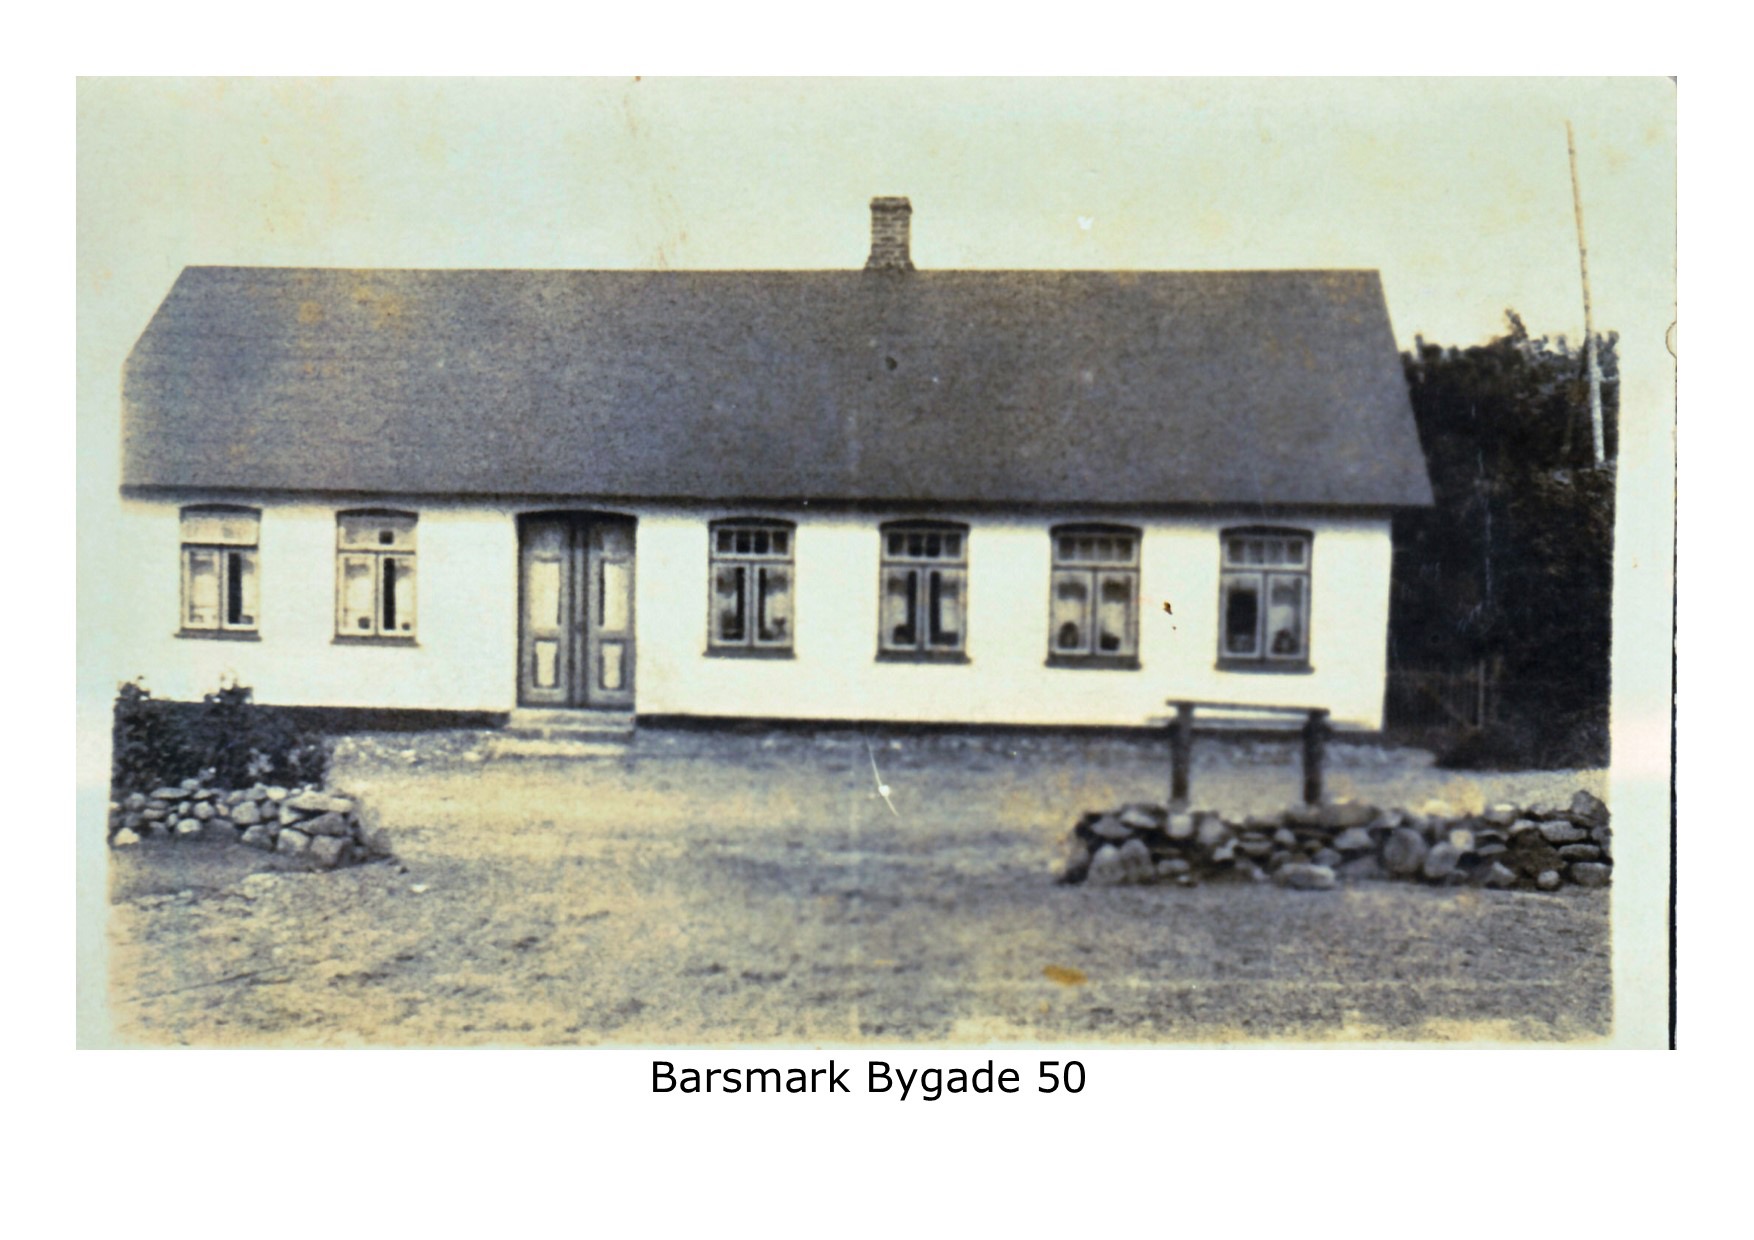 Barsmark Bygade 50 